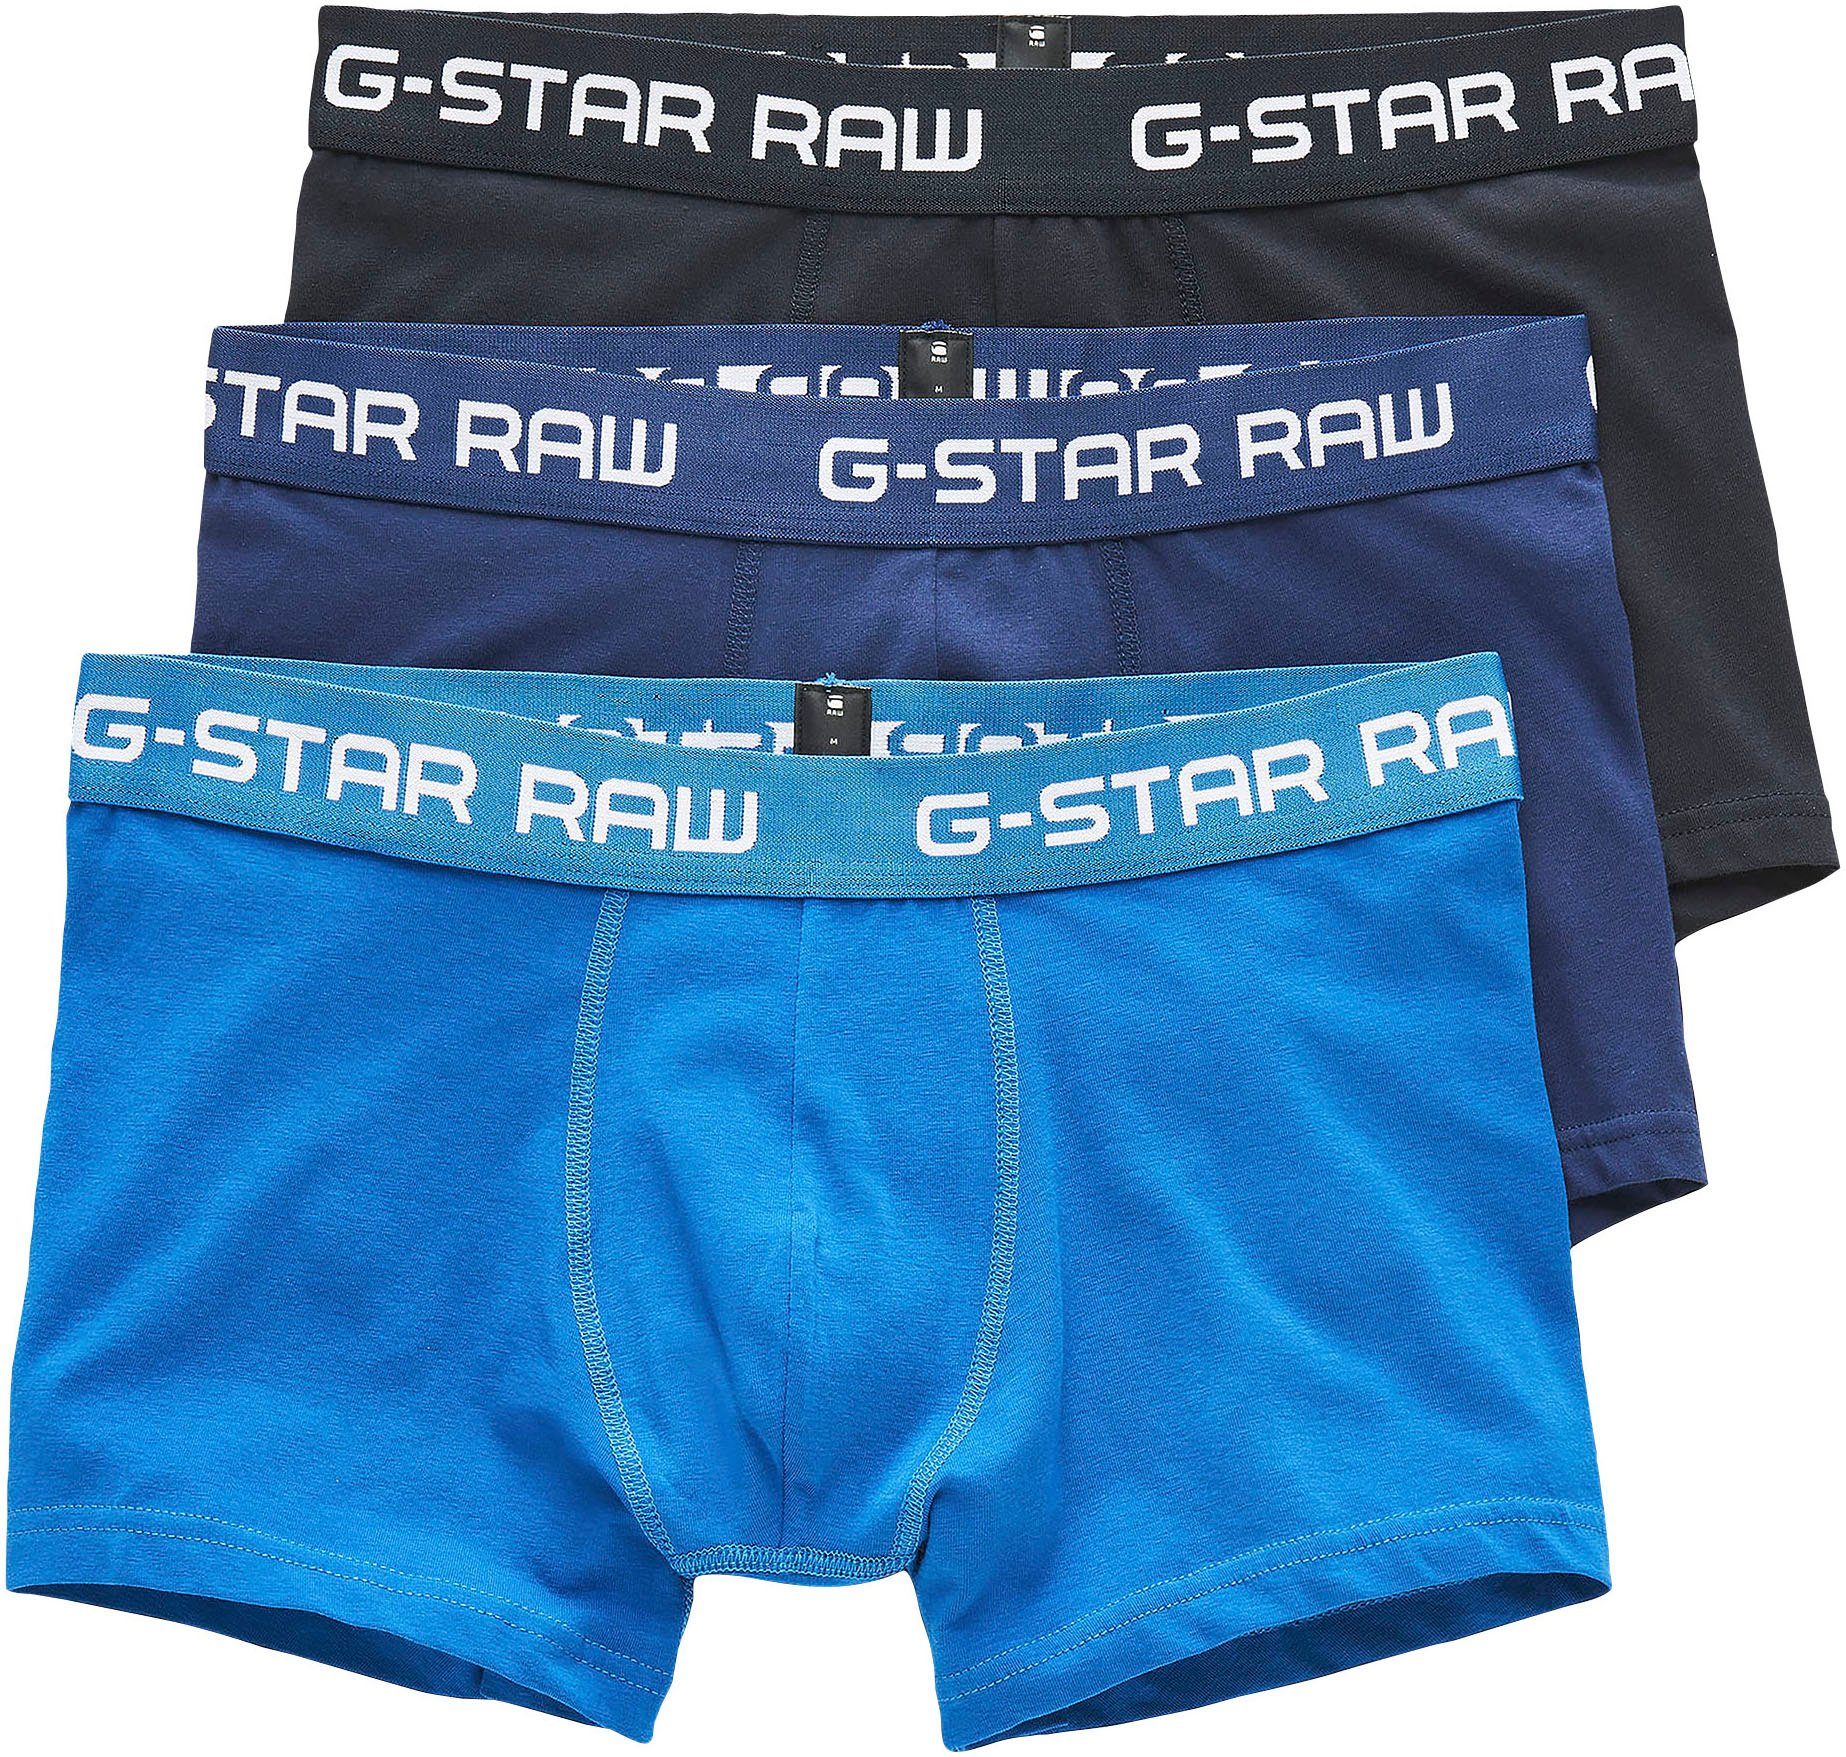 RAW Boxer blau, aquablau, Classic trunk 3er-Pack) G-Star (Packung, pack clr marine 3 3-St.,